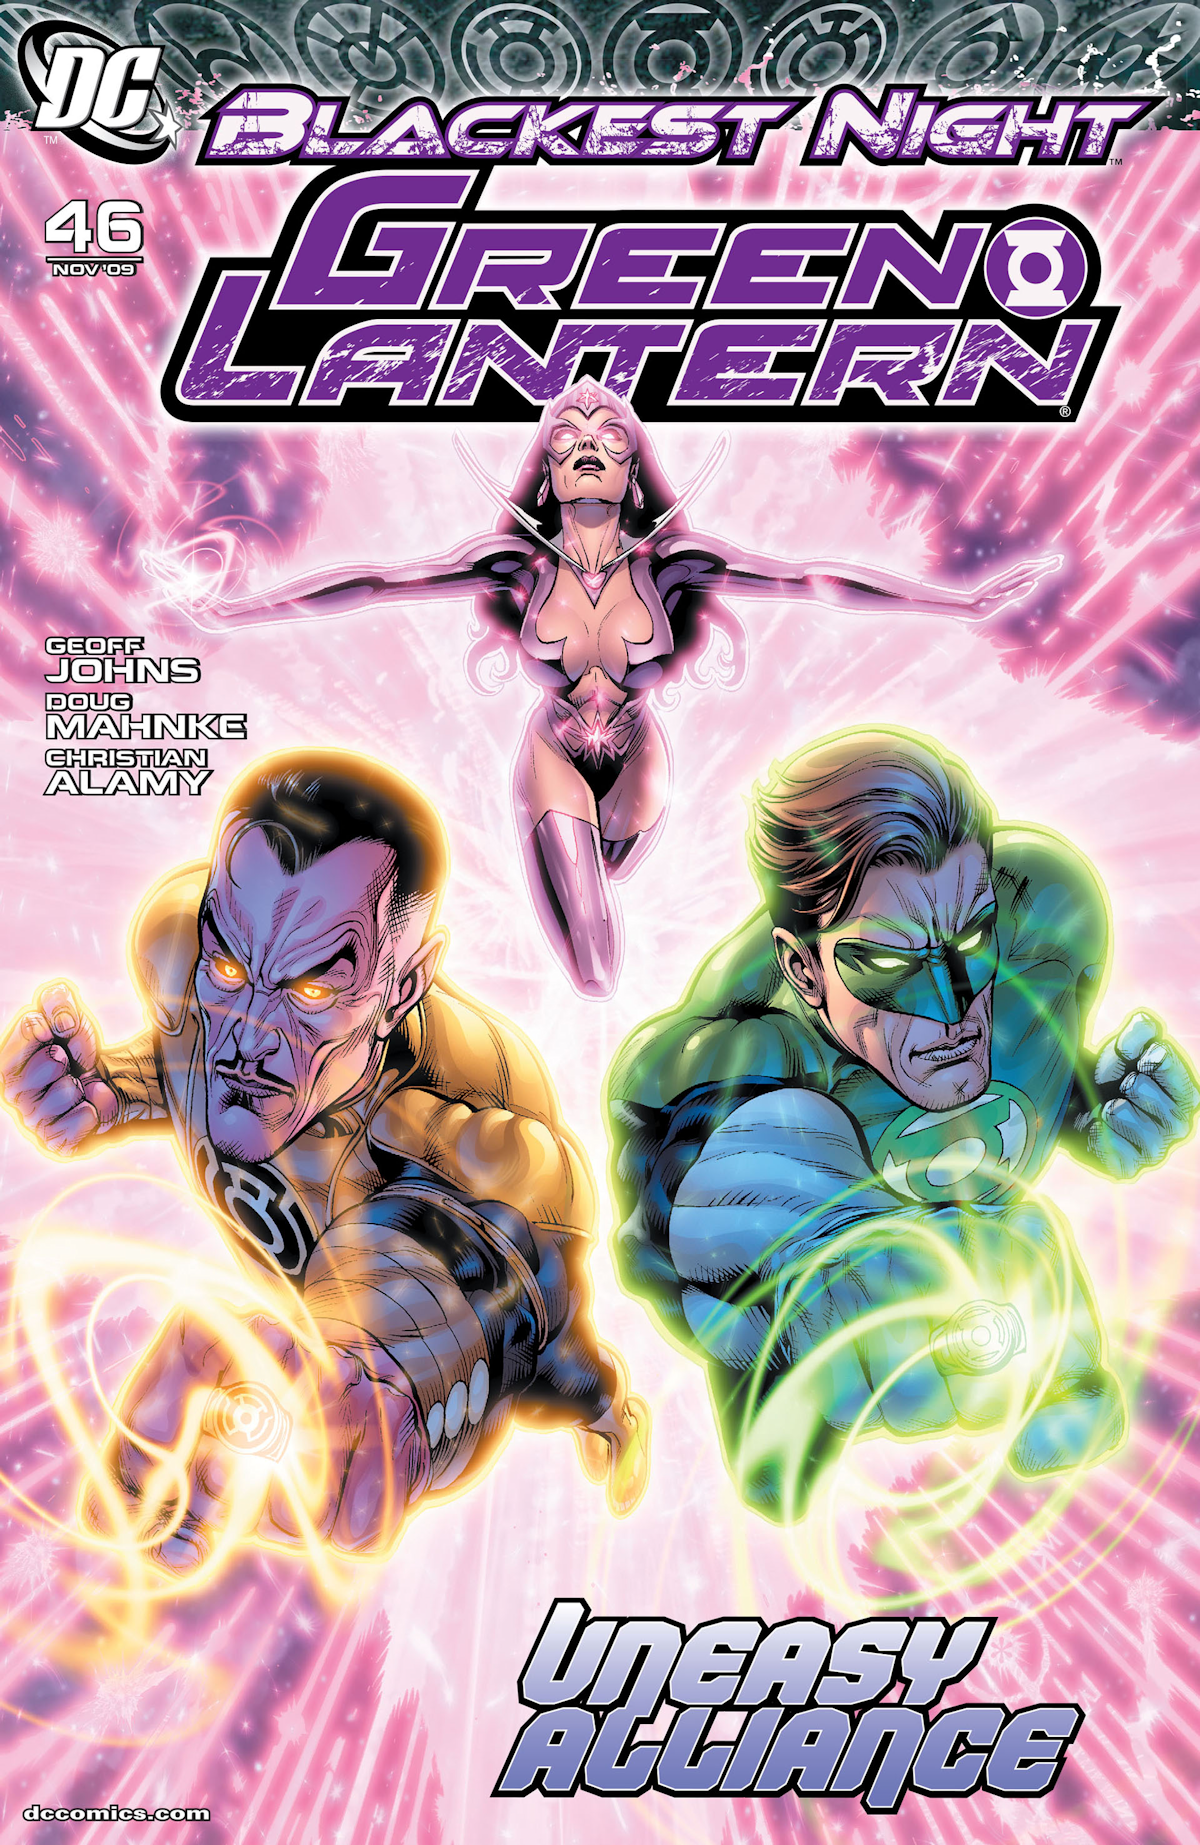 Green Lantern Vol. 4 46 (Cover A)